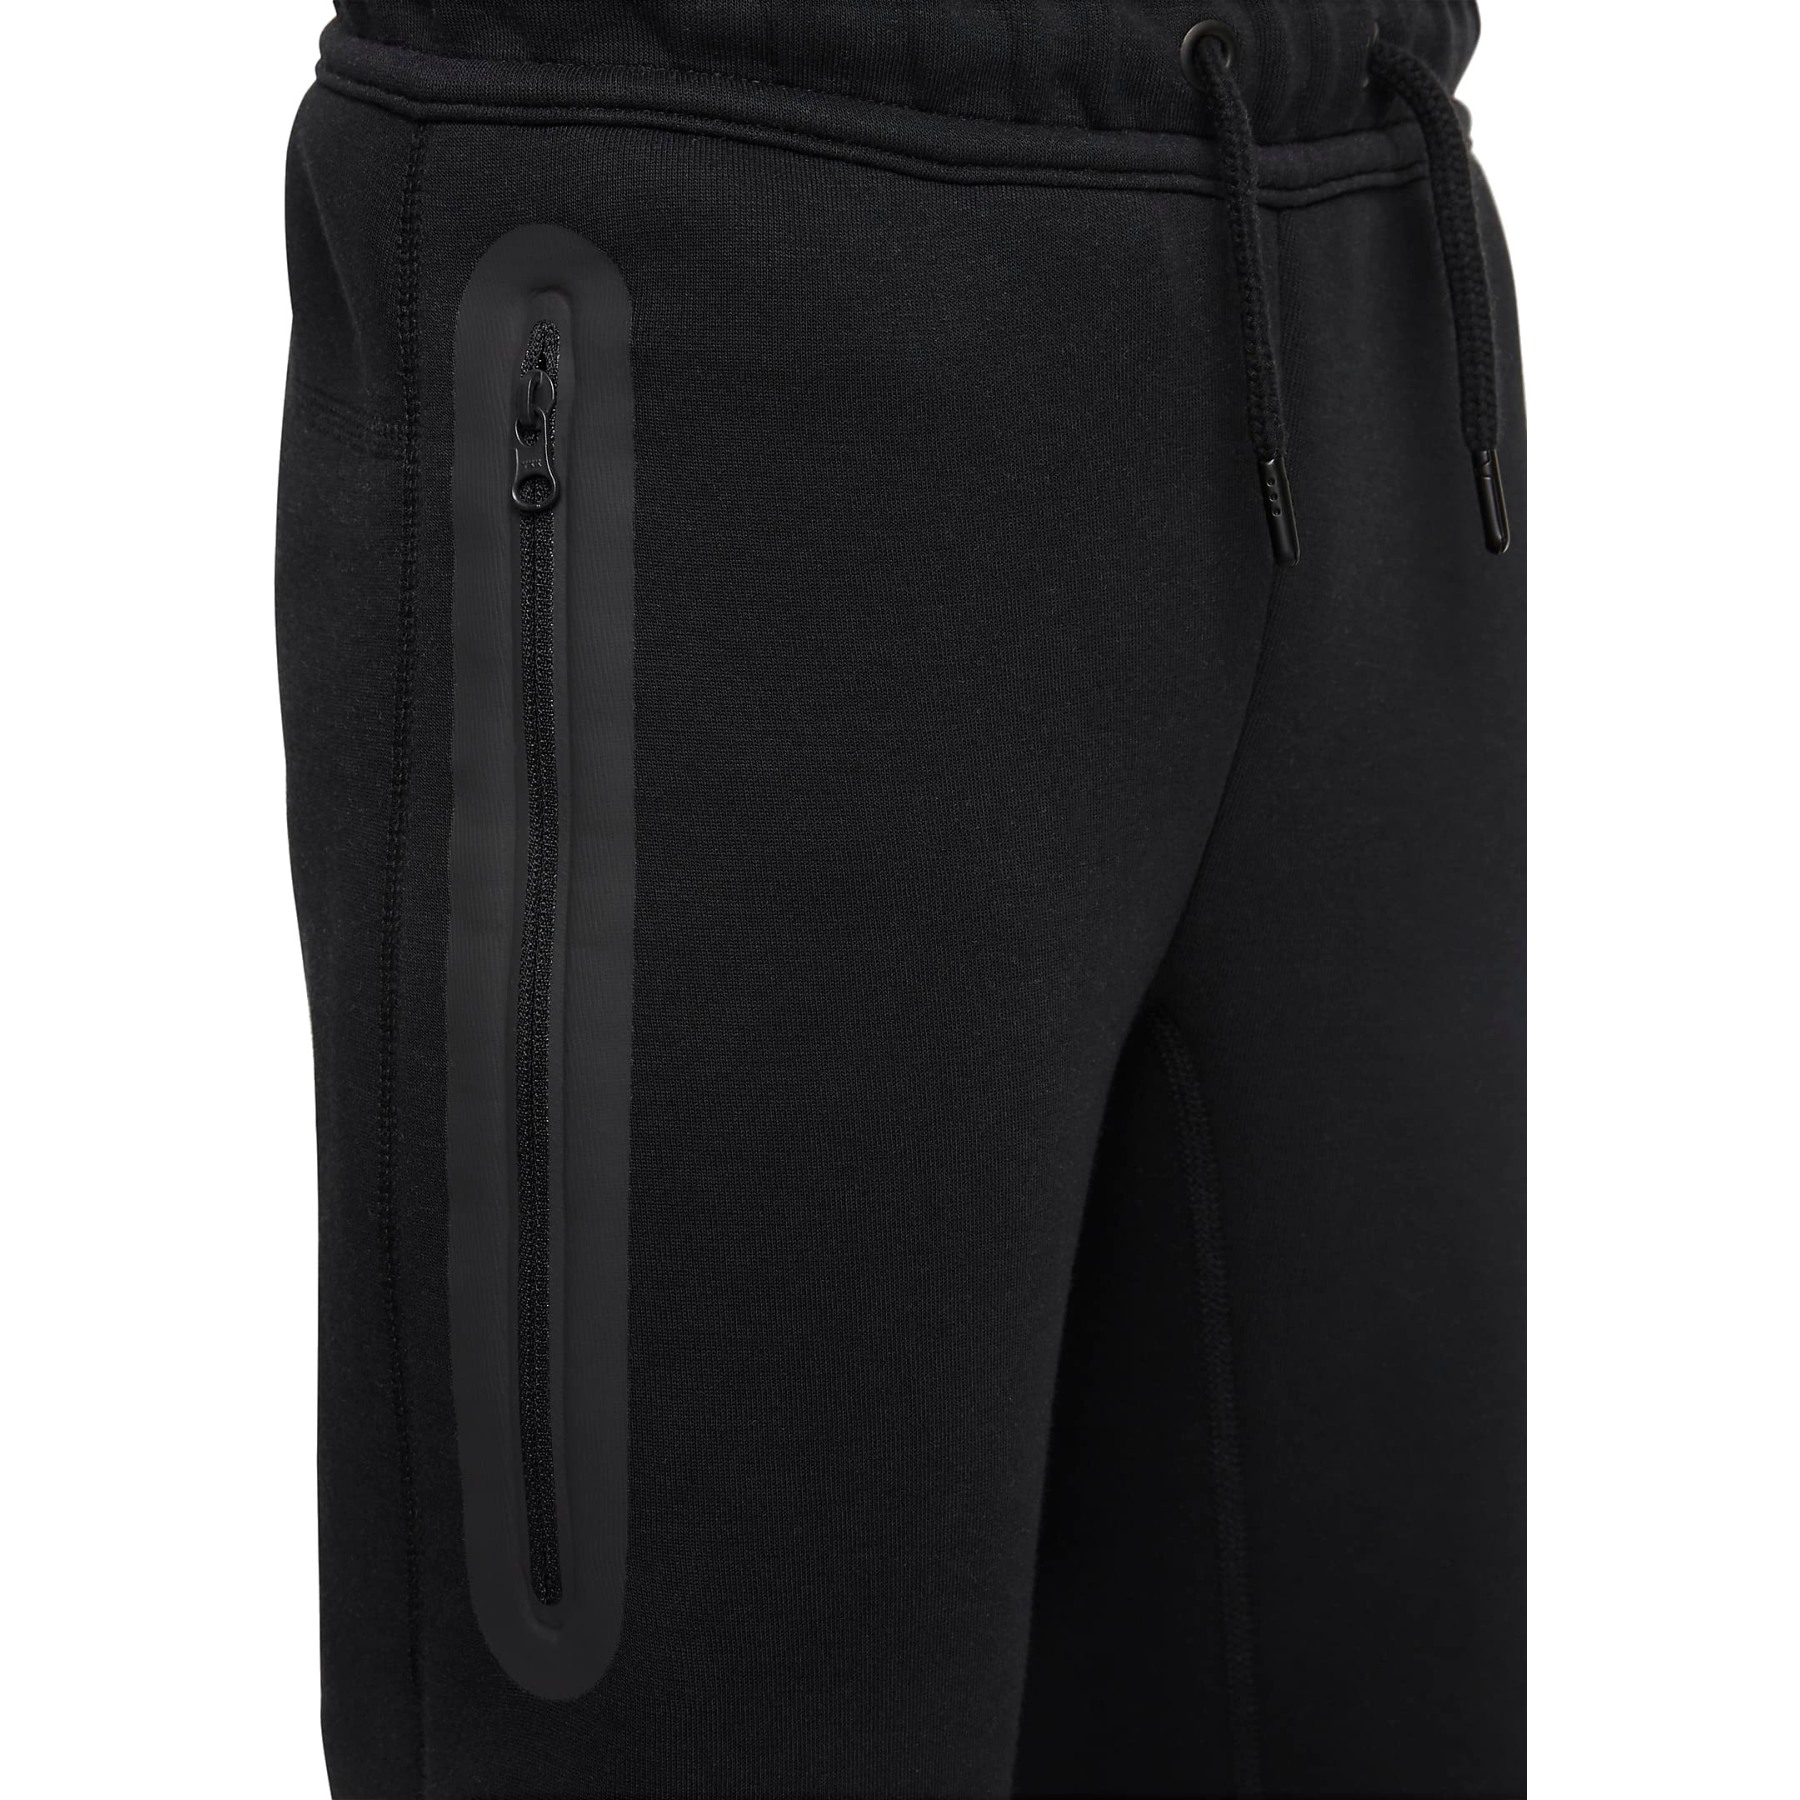 Nike Sportswear Tech Fleece Hose für ältere Kinder - schwarz/schwarz/schwarz  FD3287-010